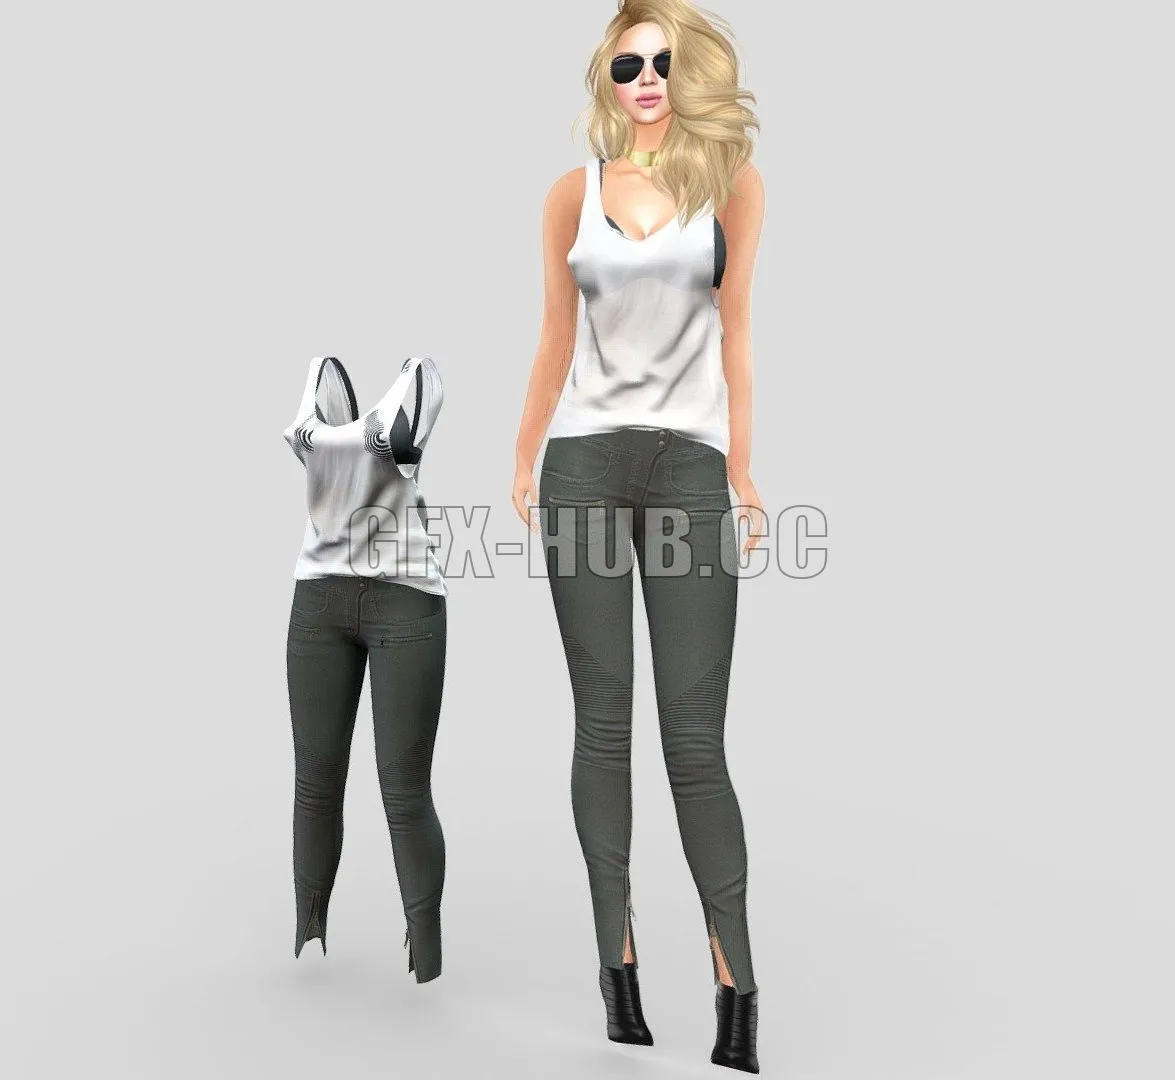 PBR Game 3D Model – Tank Top Bralet Denim Pants Full Female Outfit